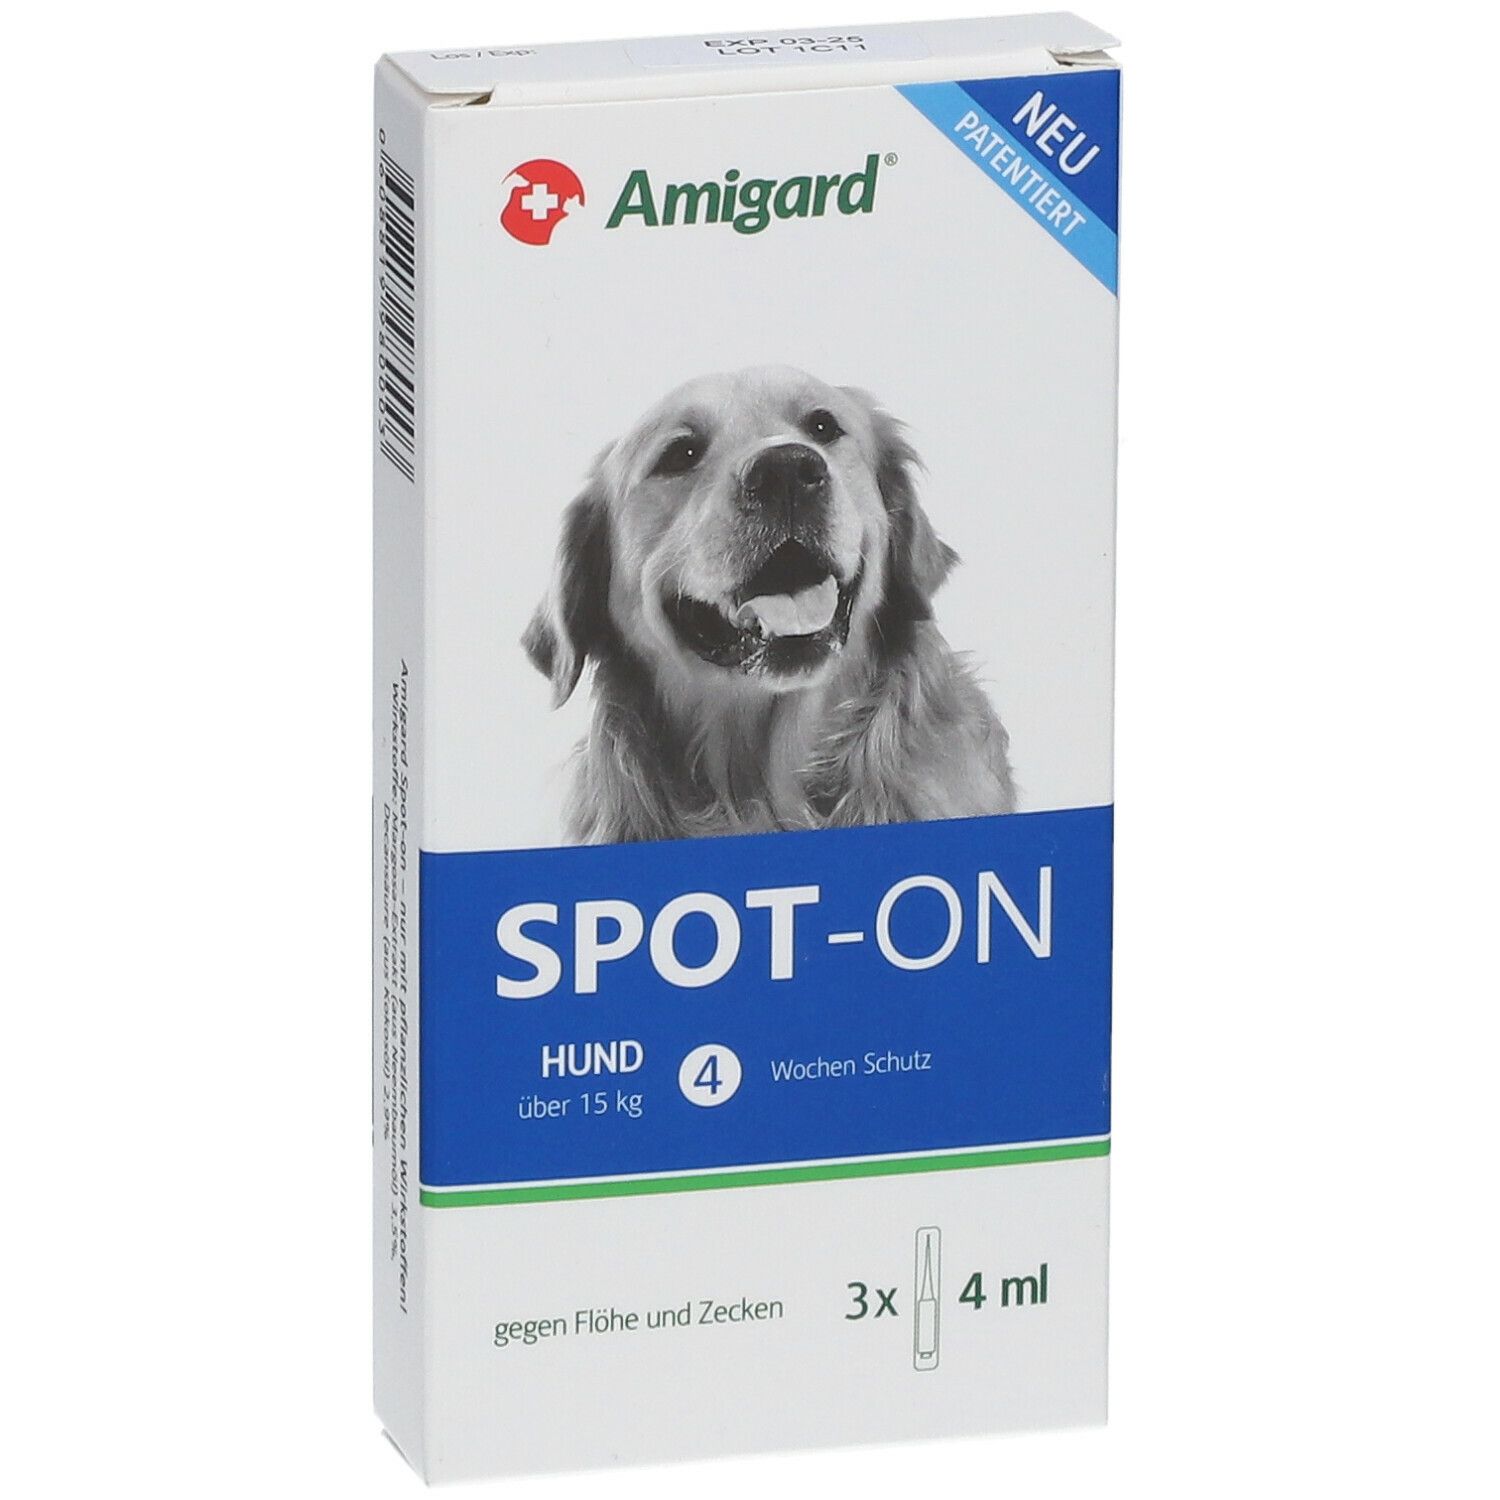 Amigard® Spot-On für Hunde über 15 kg